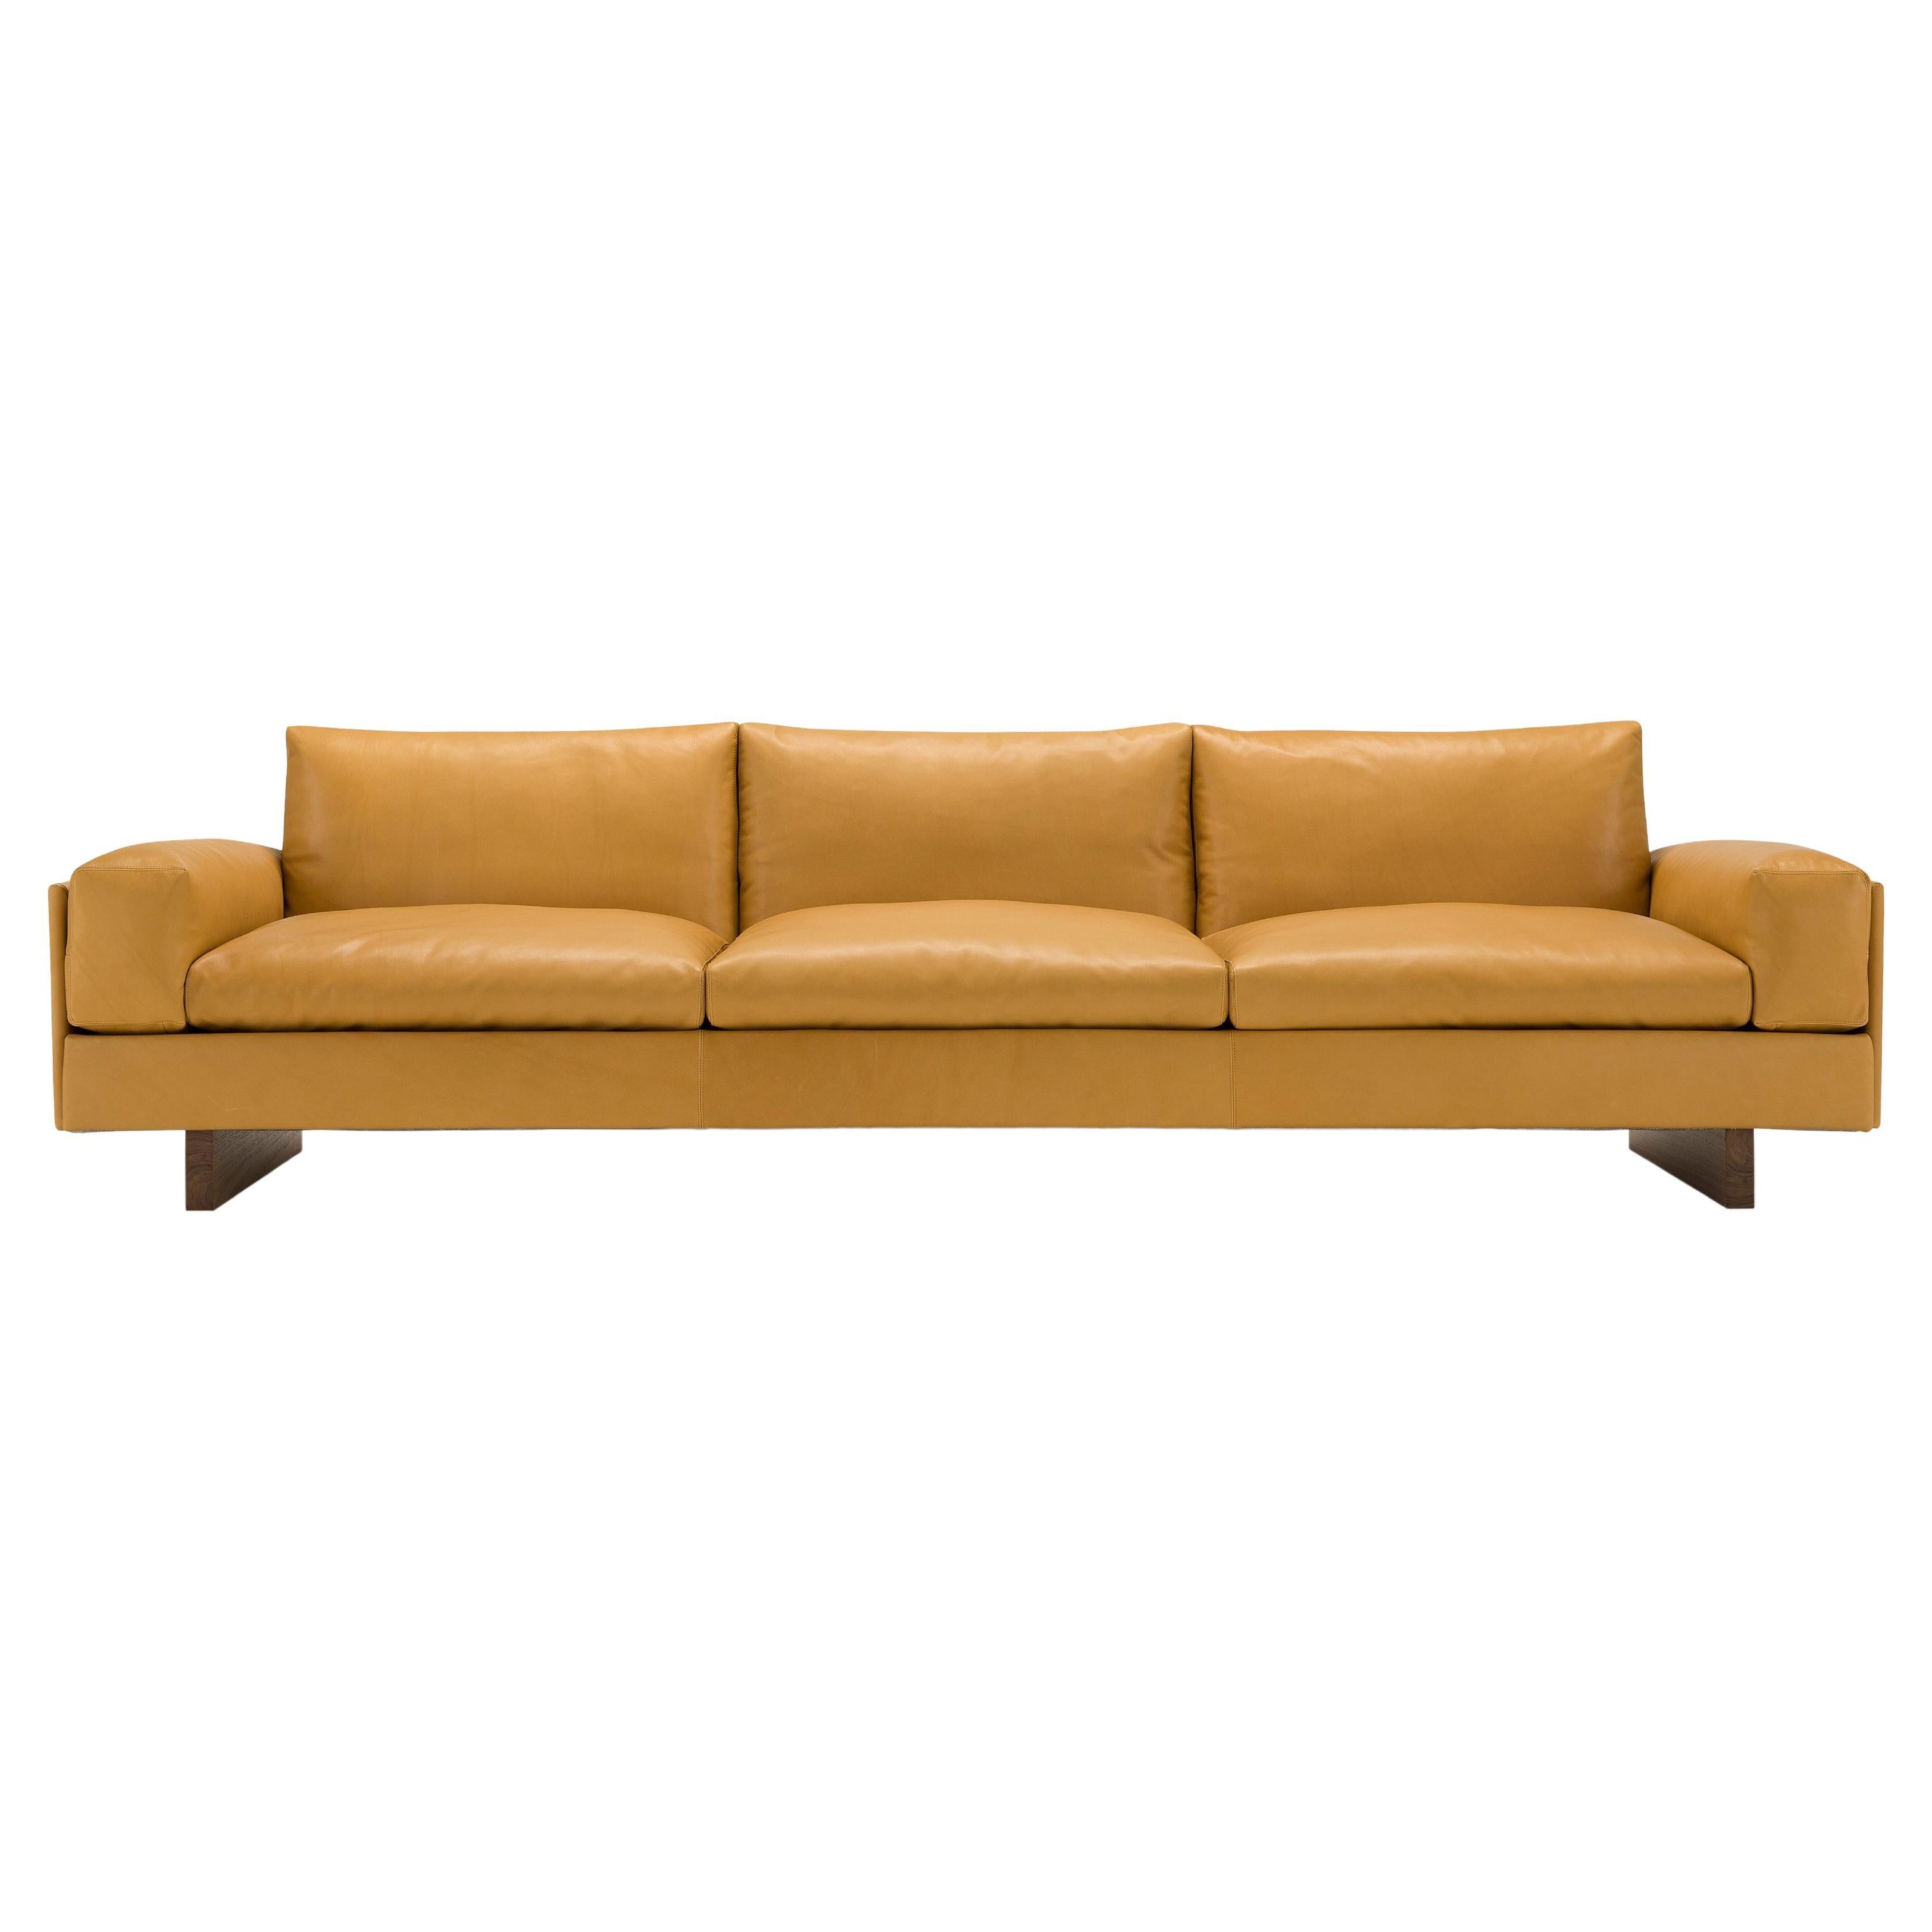 Amura 'Tau' Sofa in Yellow Leather by Emanuel Gargano